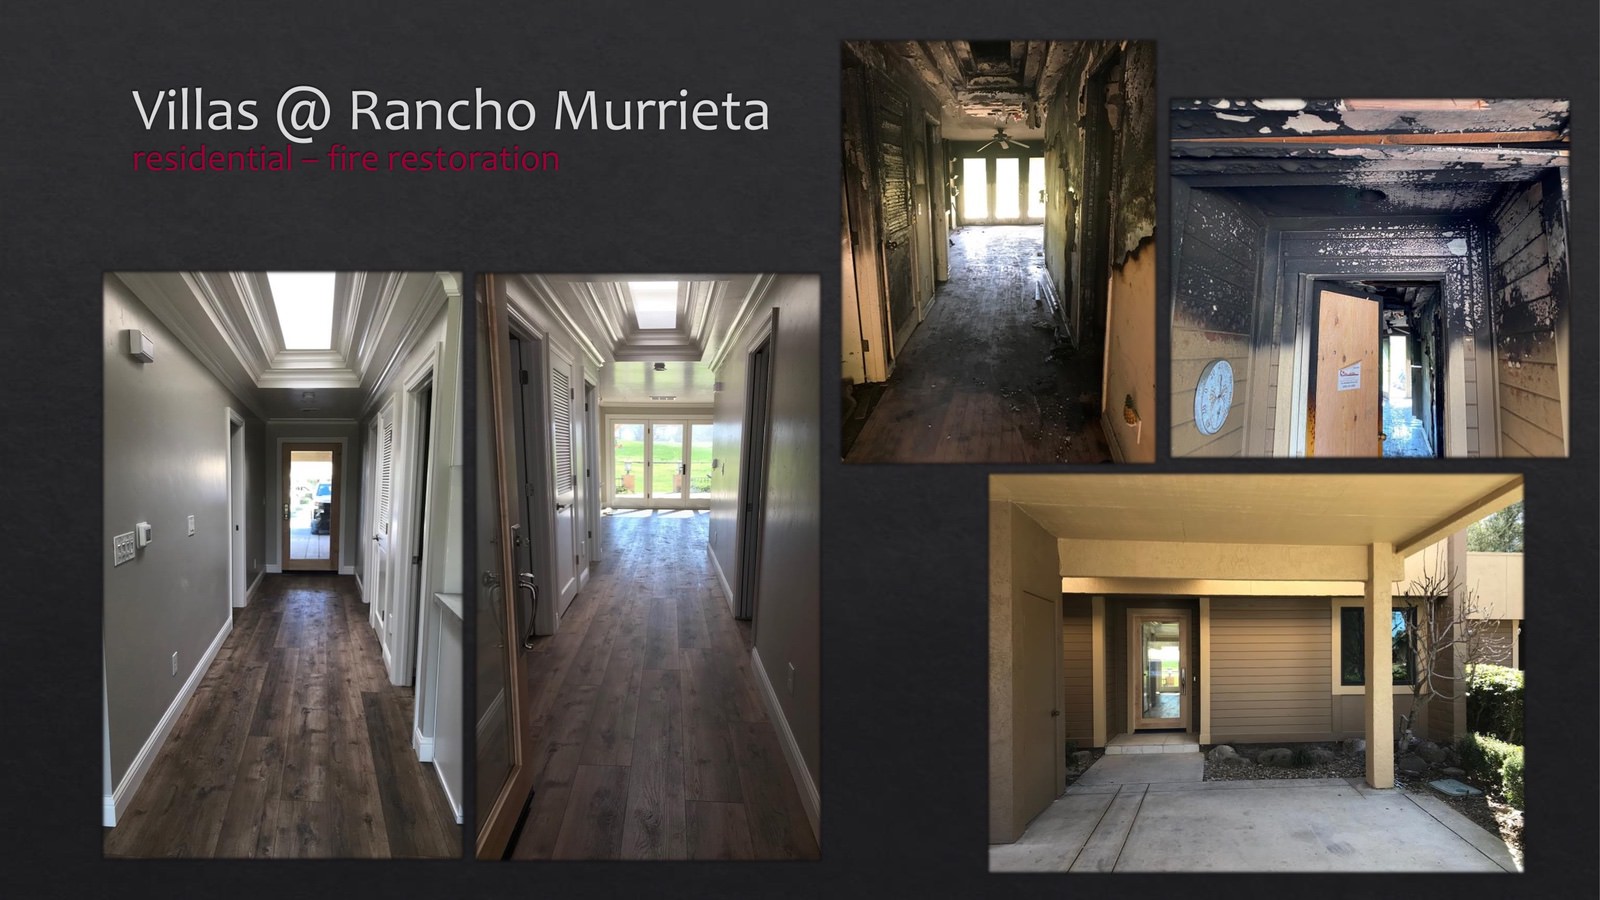 Rancho Murrieta Villas Residential fire restoration - entryway